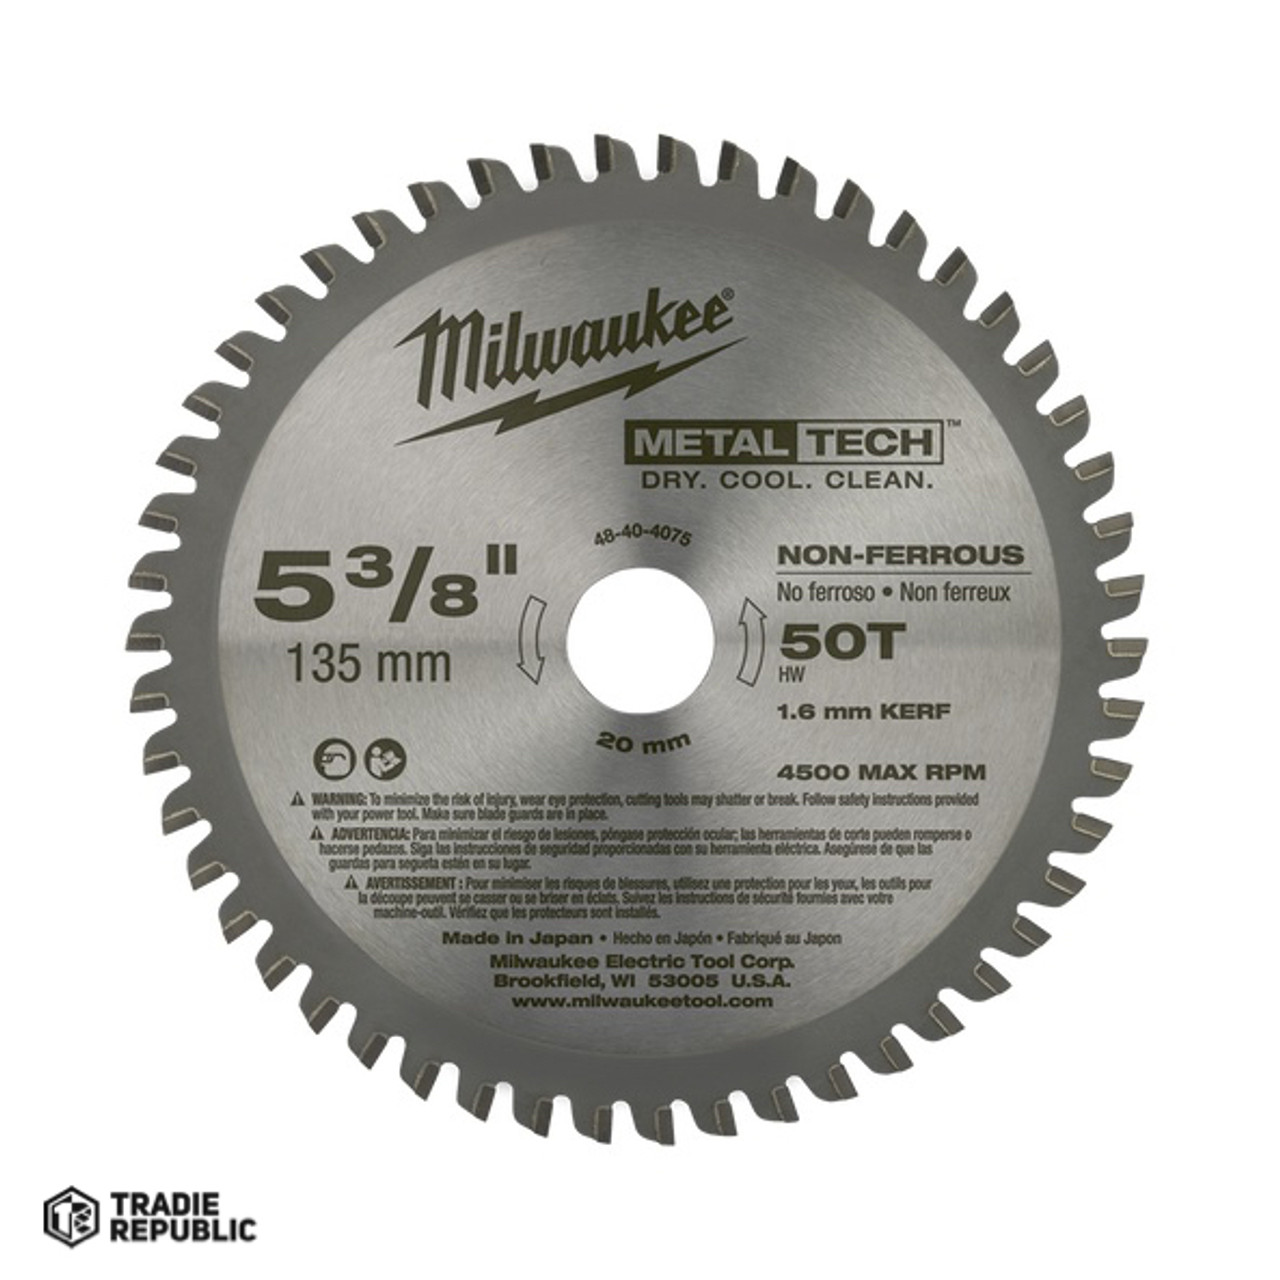 48404075 Milwaukee Metal Saw Blade 5 3/8IN 50T